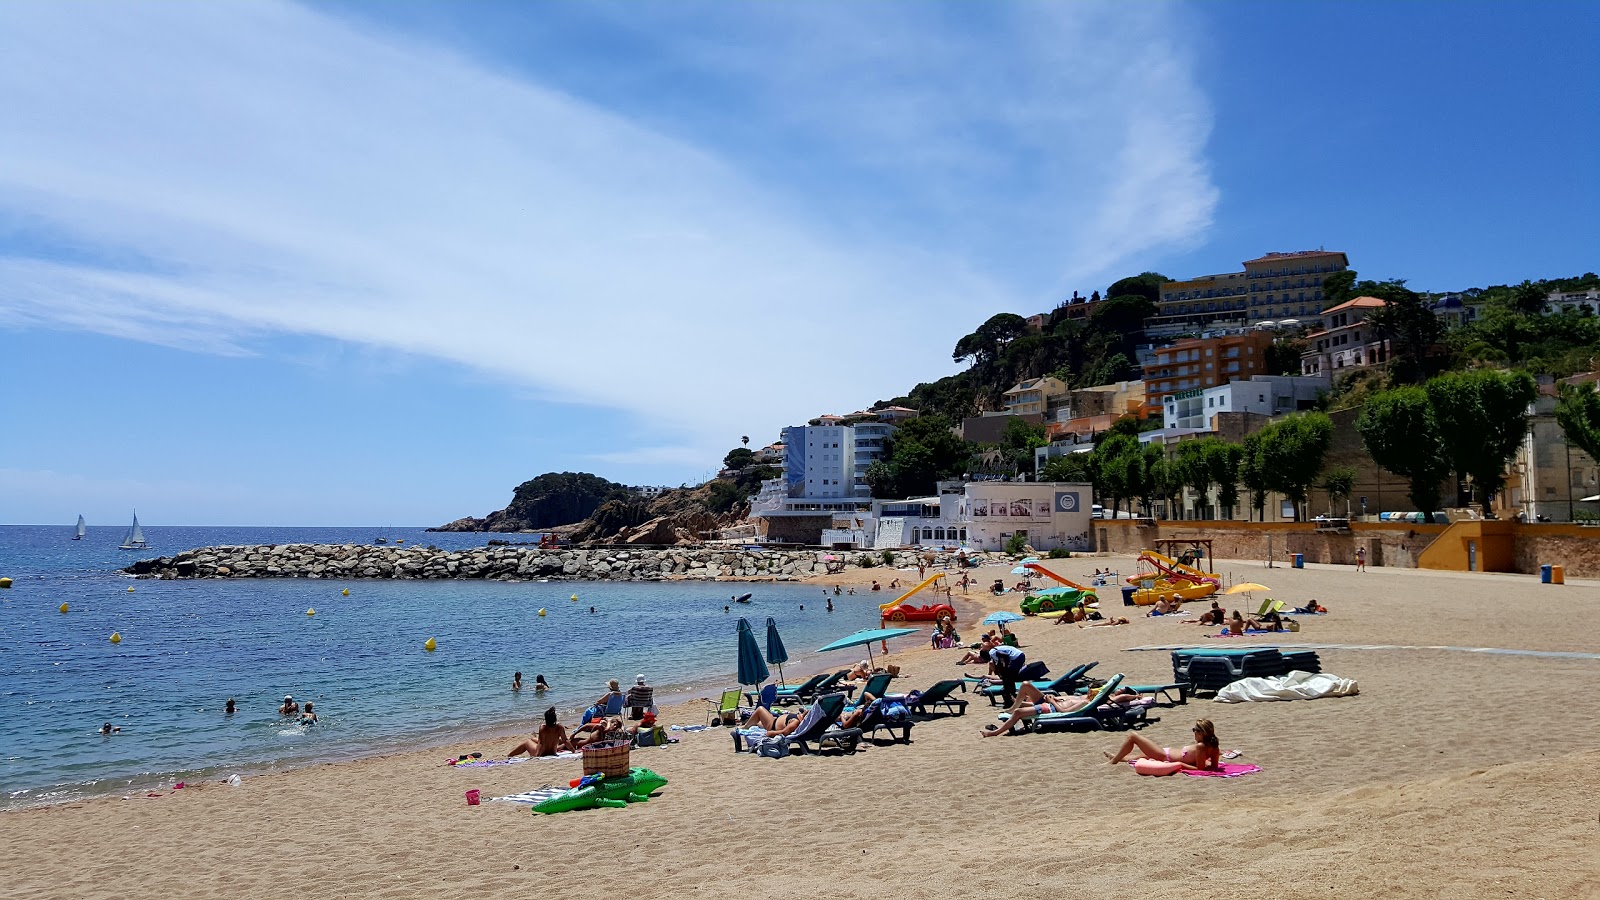 Foto von Playa de Sant Feliu mit türkisfarbenes wasser Oberfläche